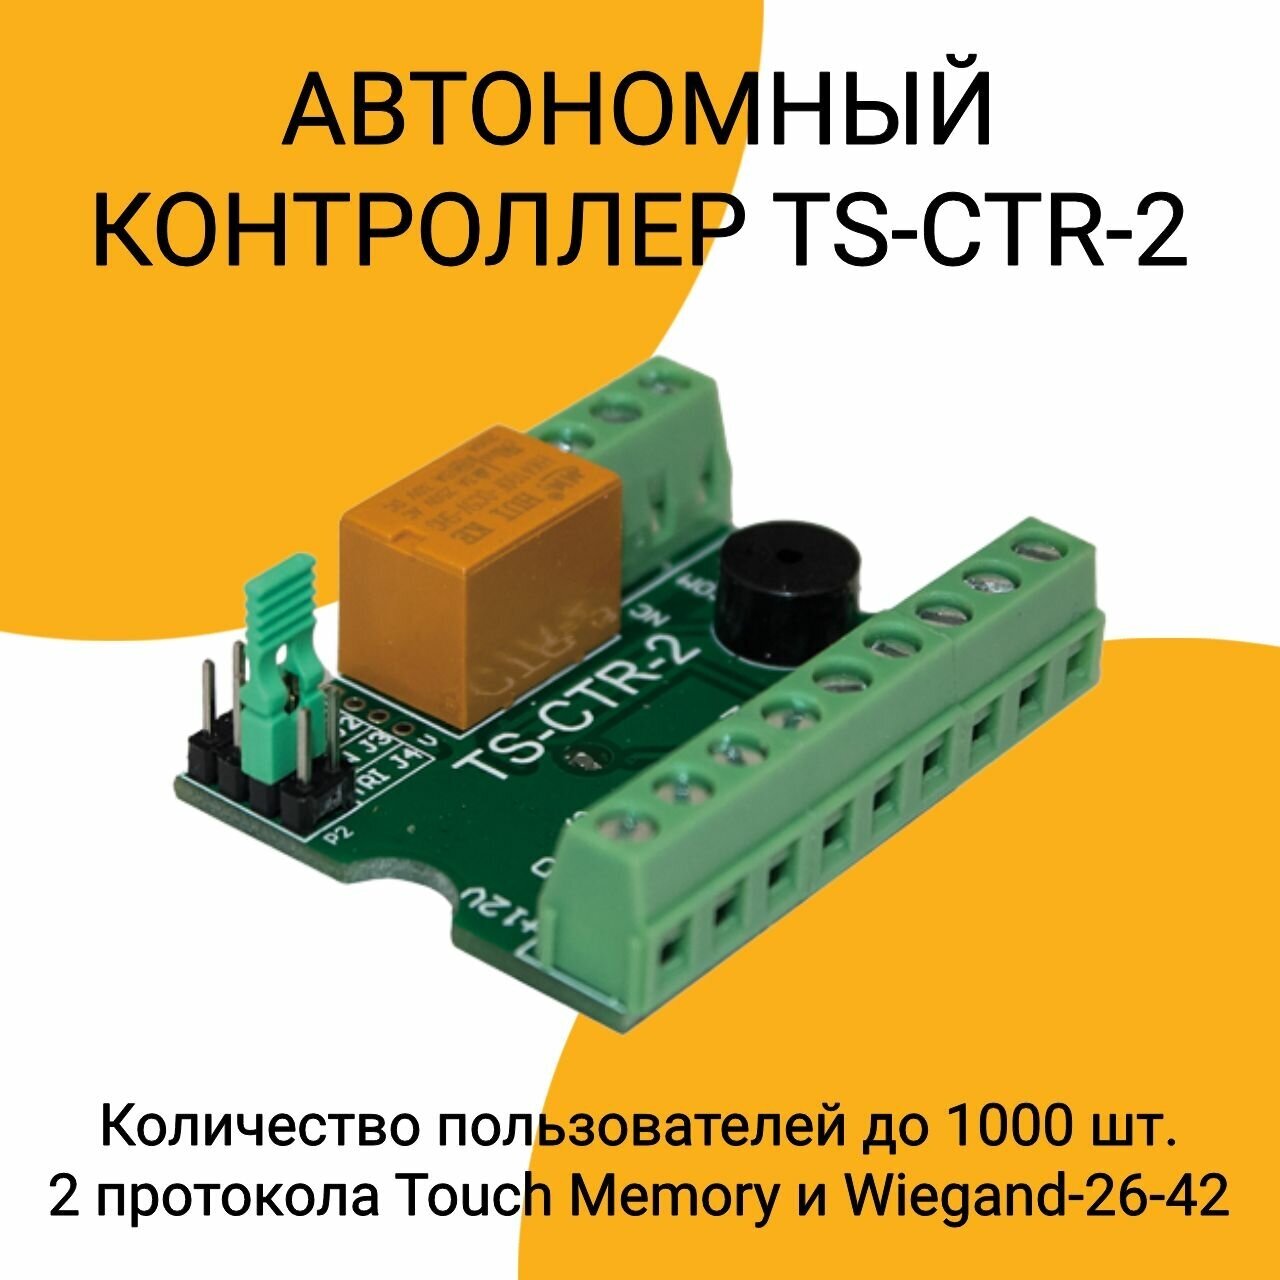 TS-CTR-2 автономный контроллер Tantos